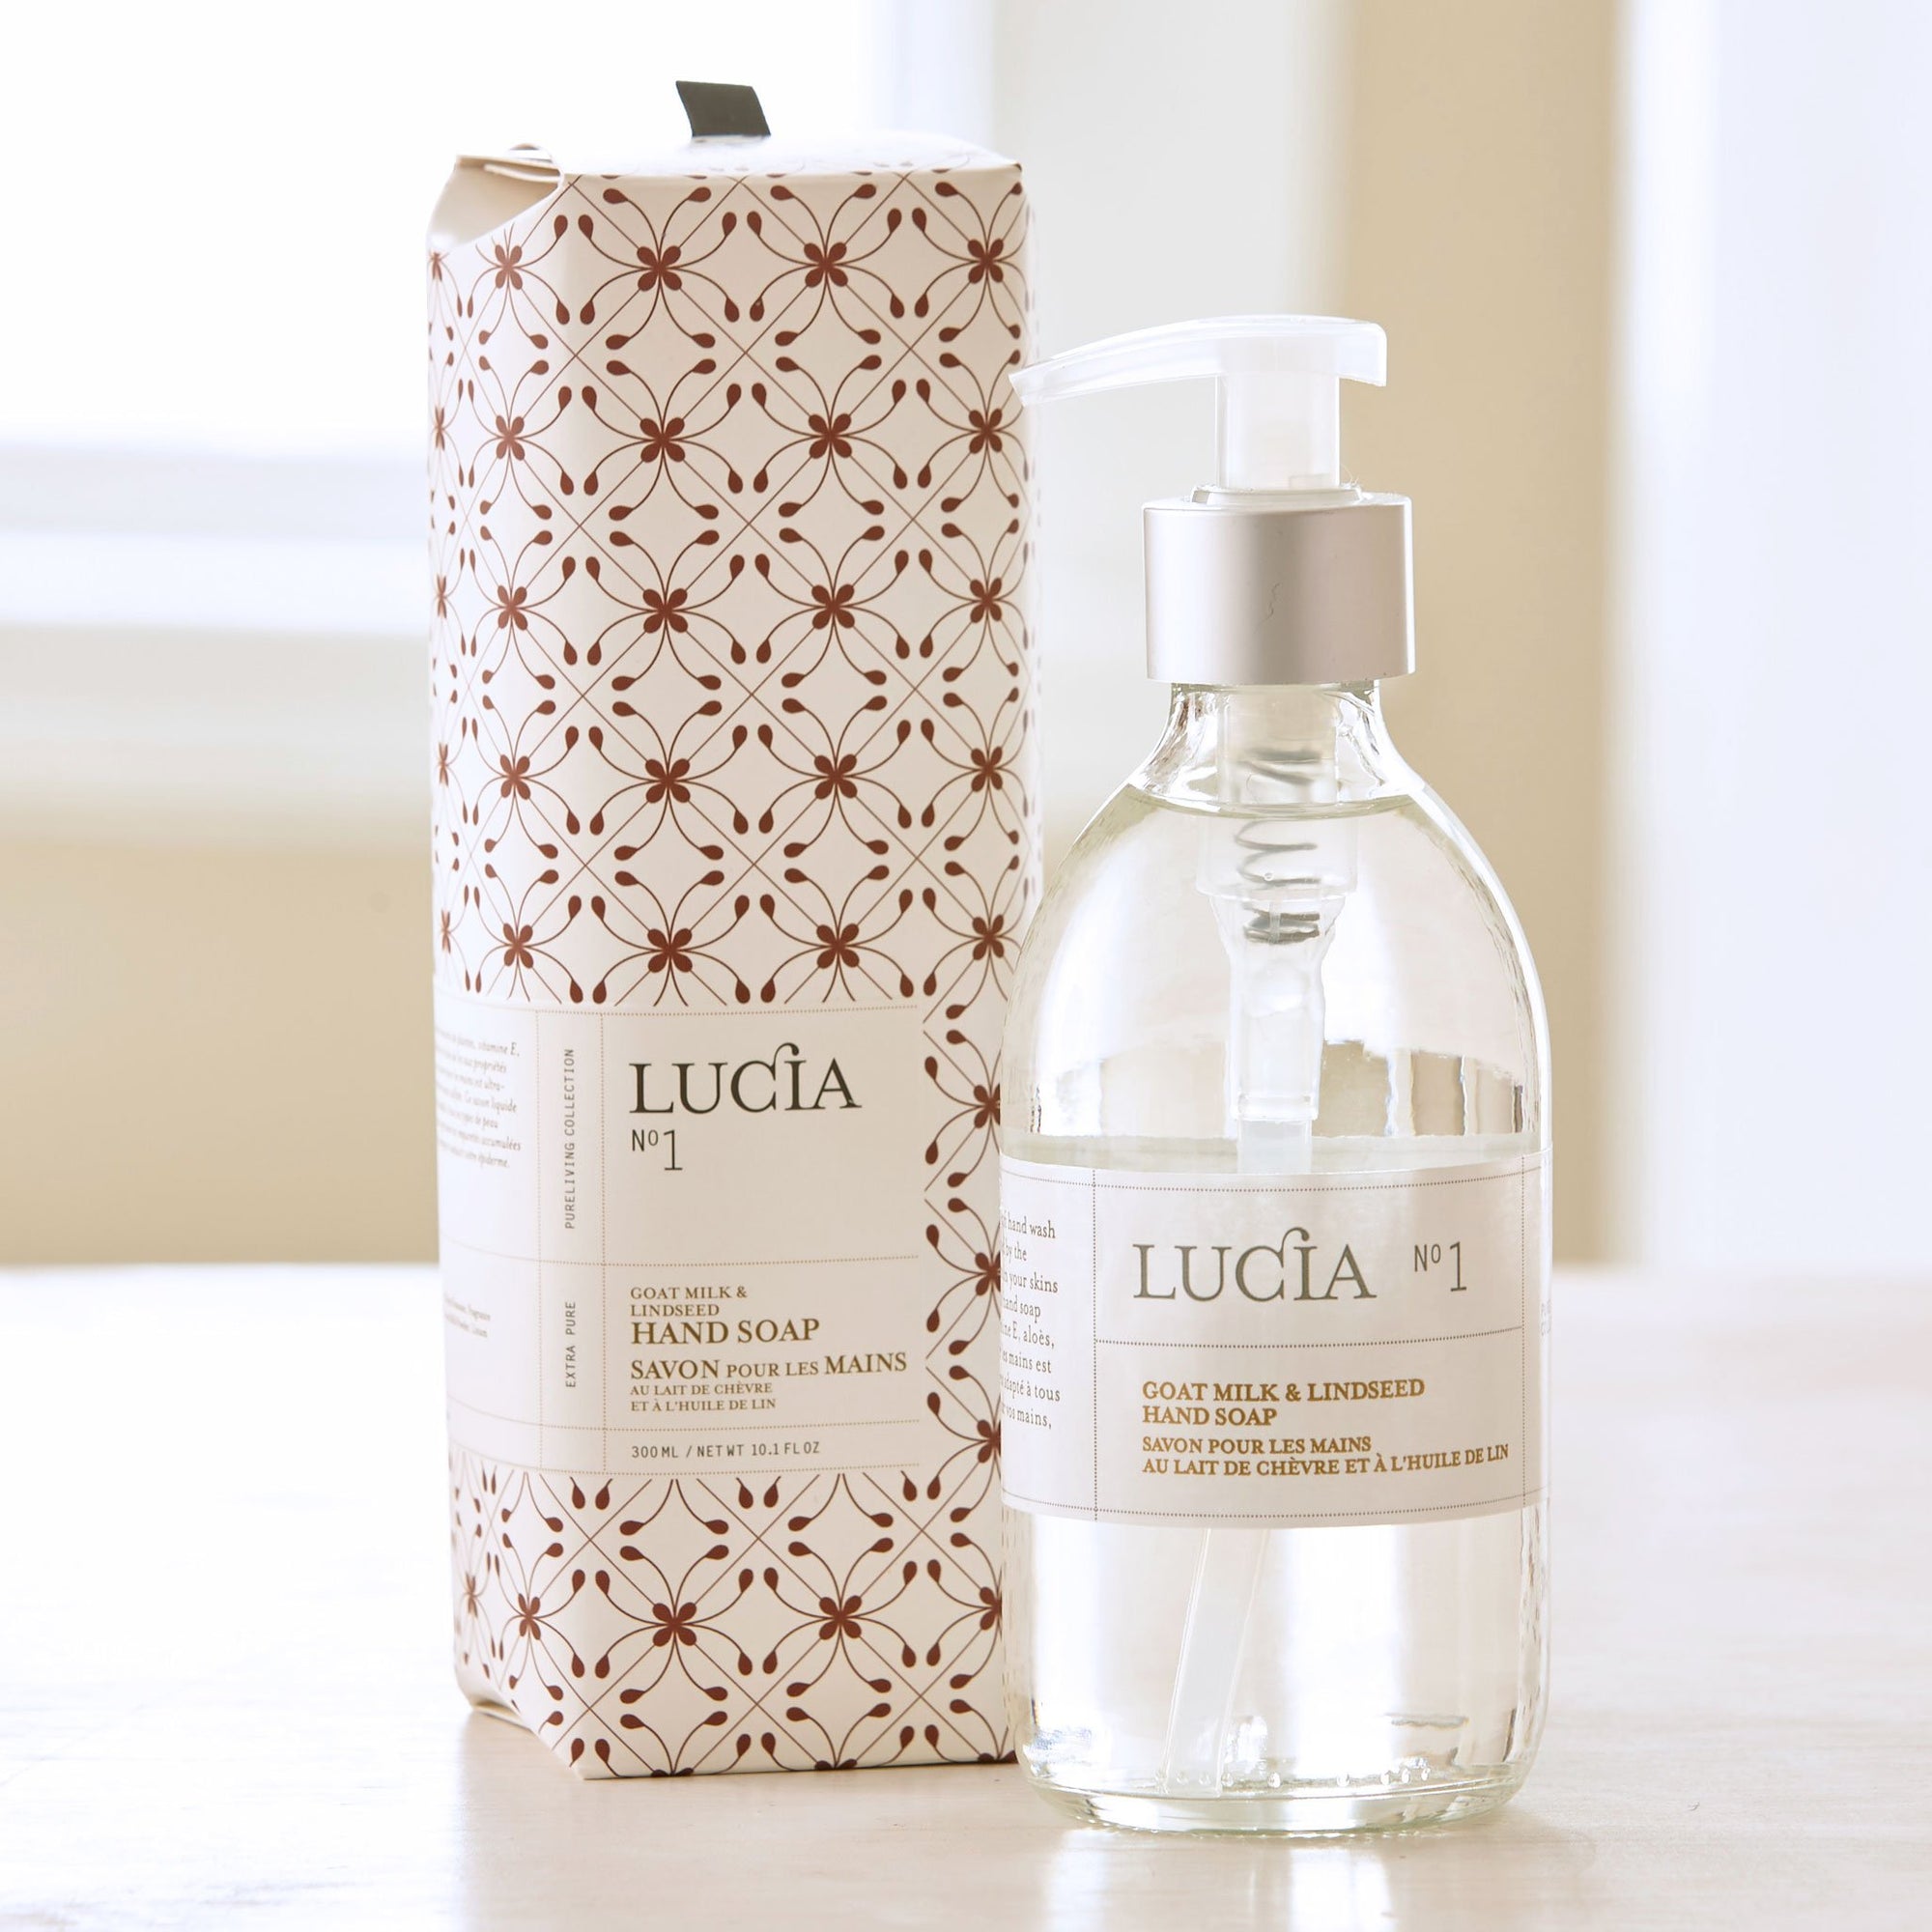 Lucia soap